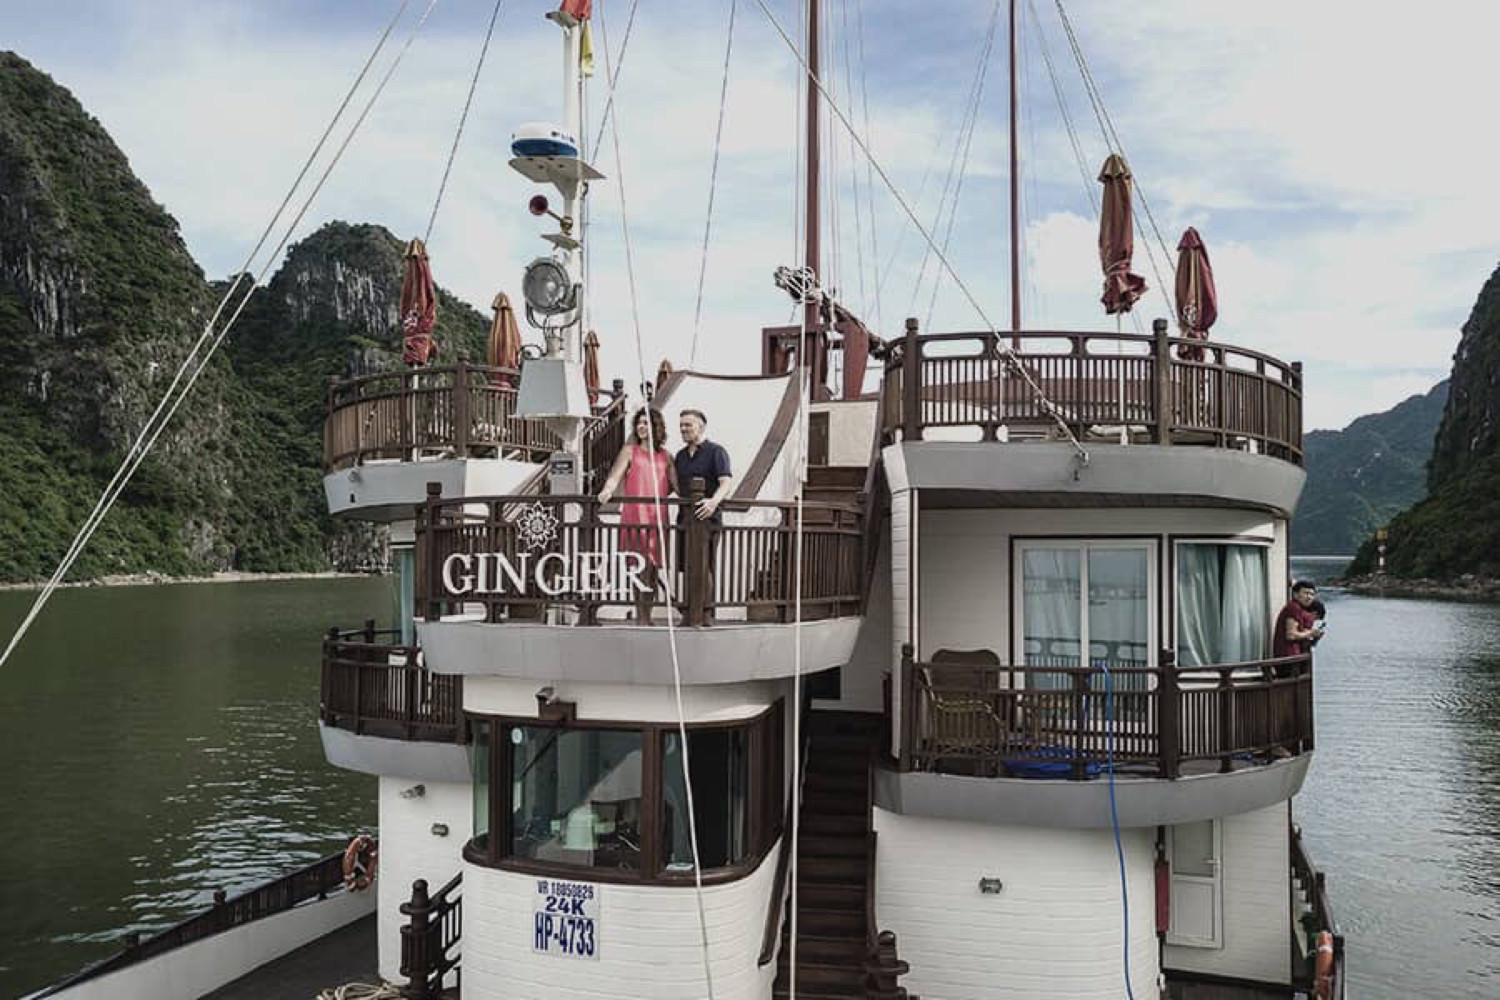 heritage line vietnam lan ha bay ship ginger life on board couple escape